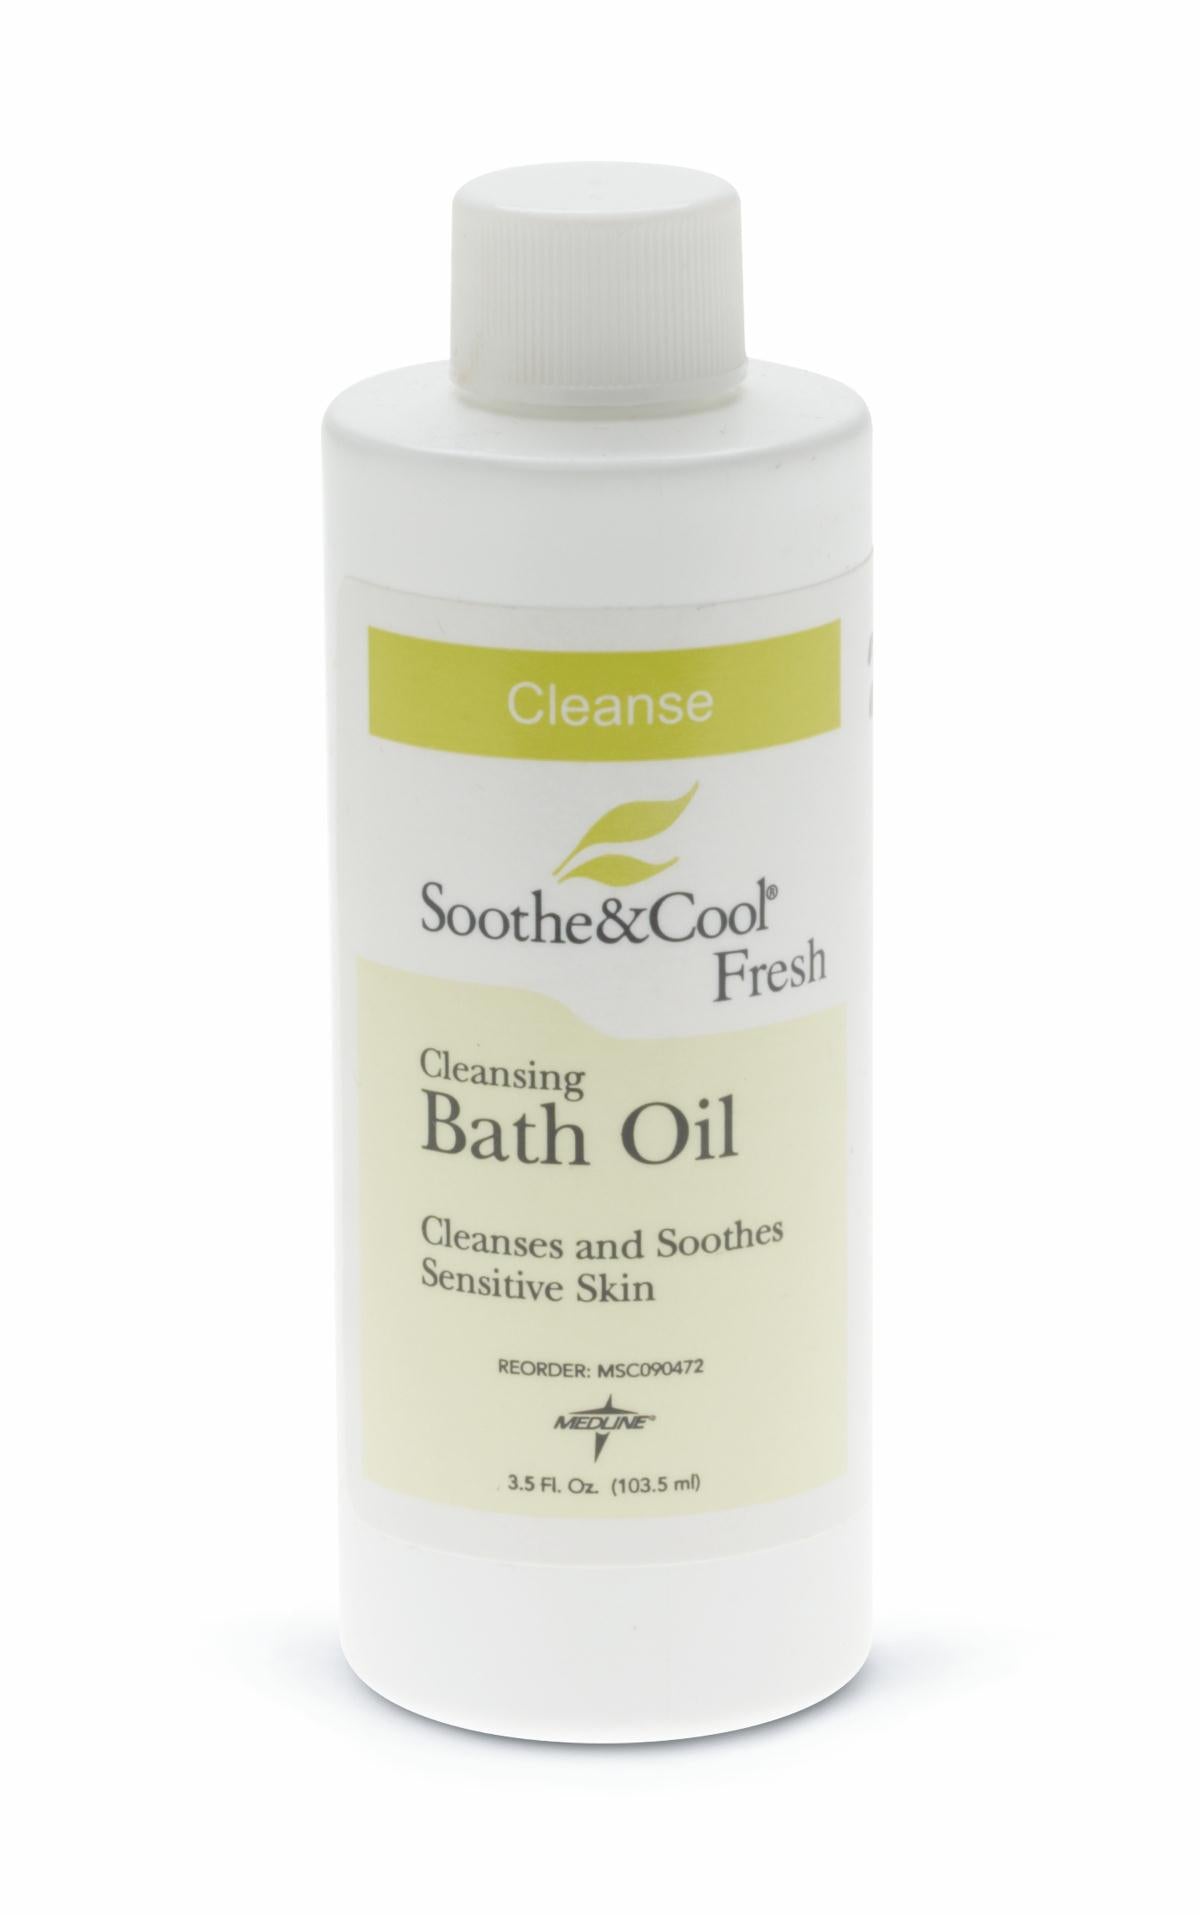 Soothe & Cool Bath Oil